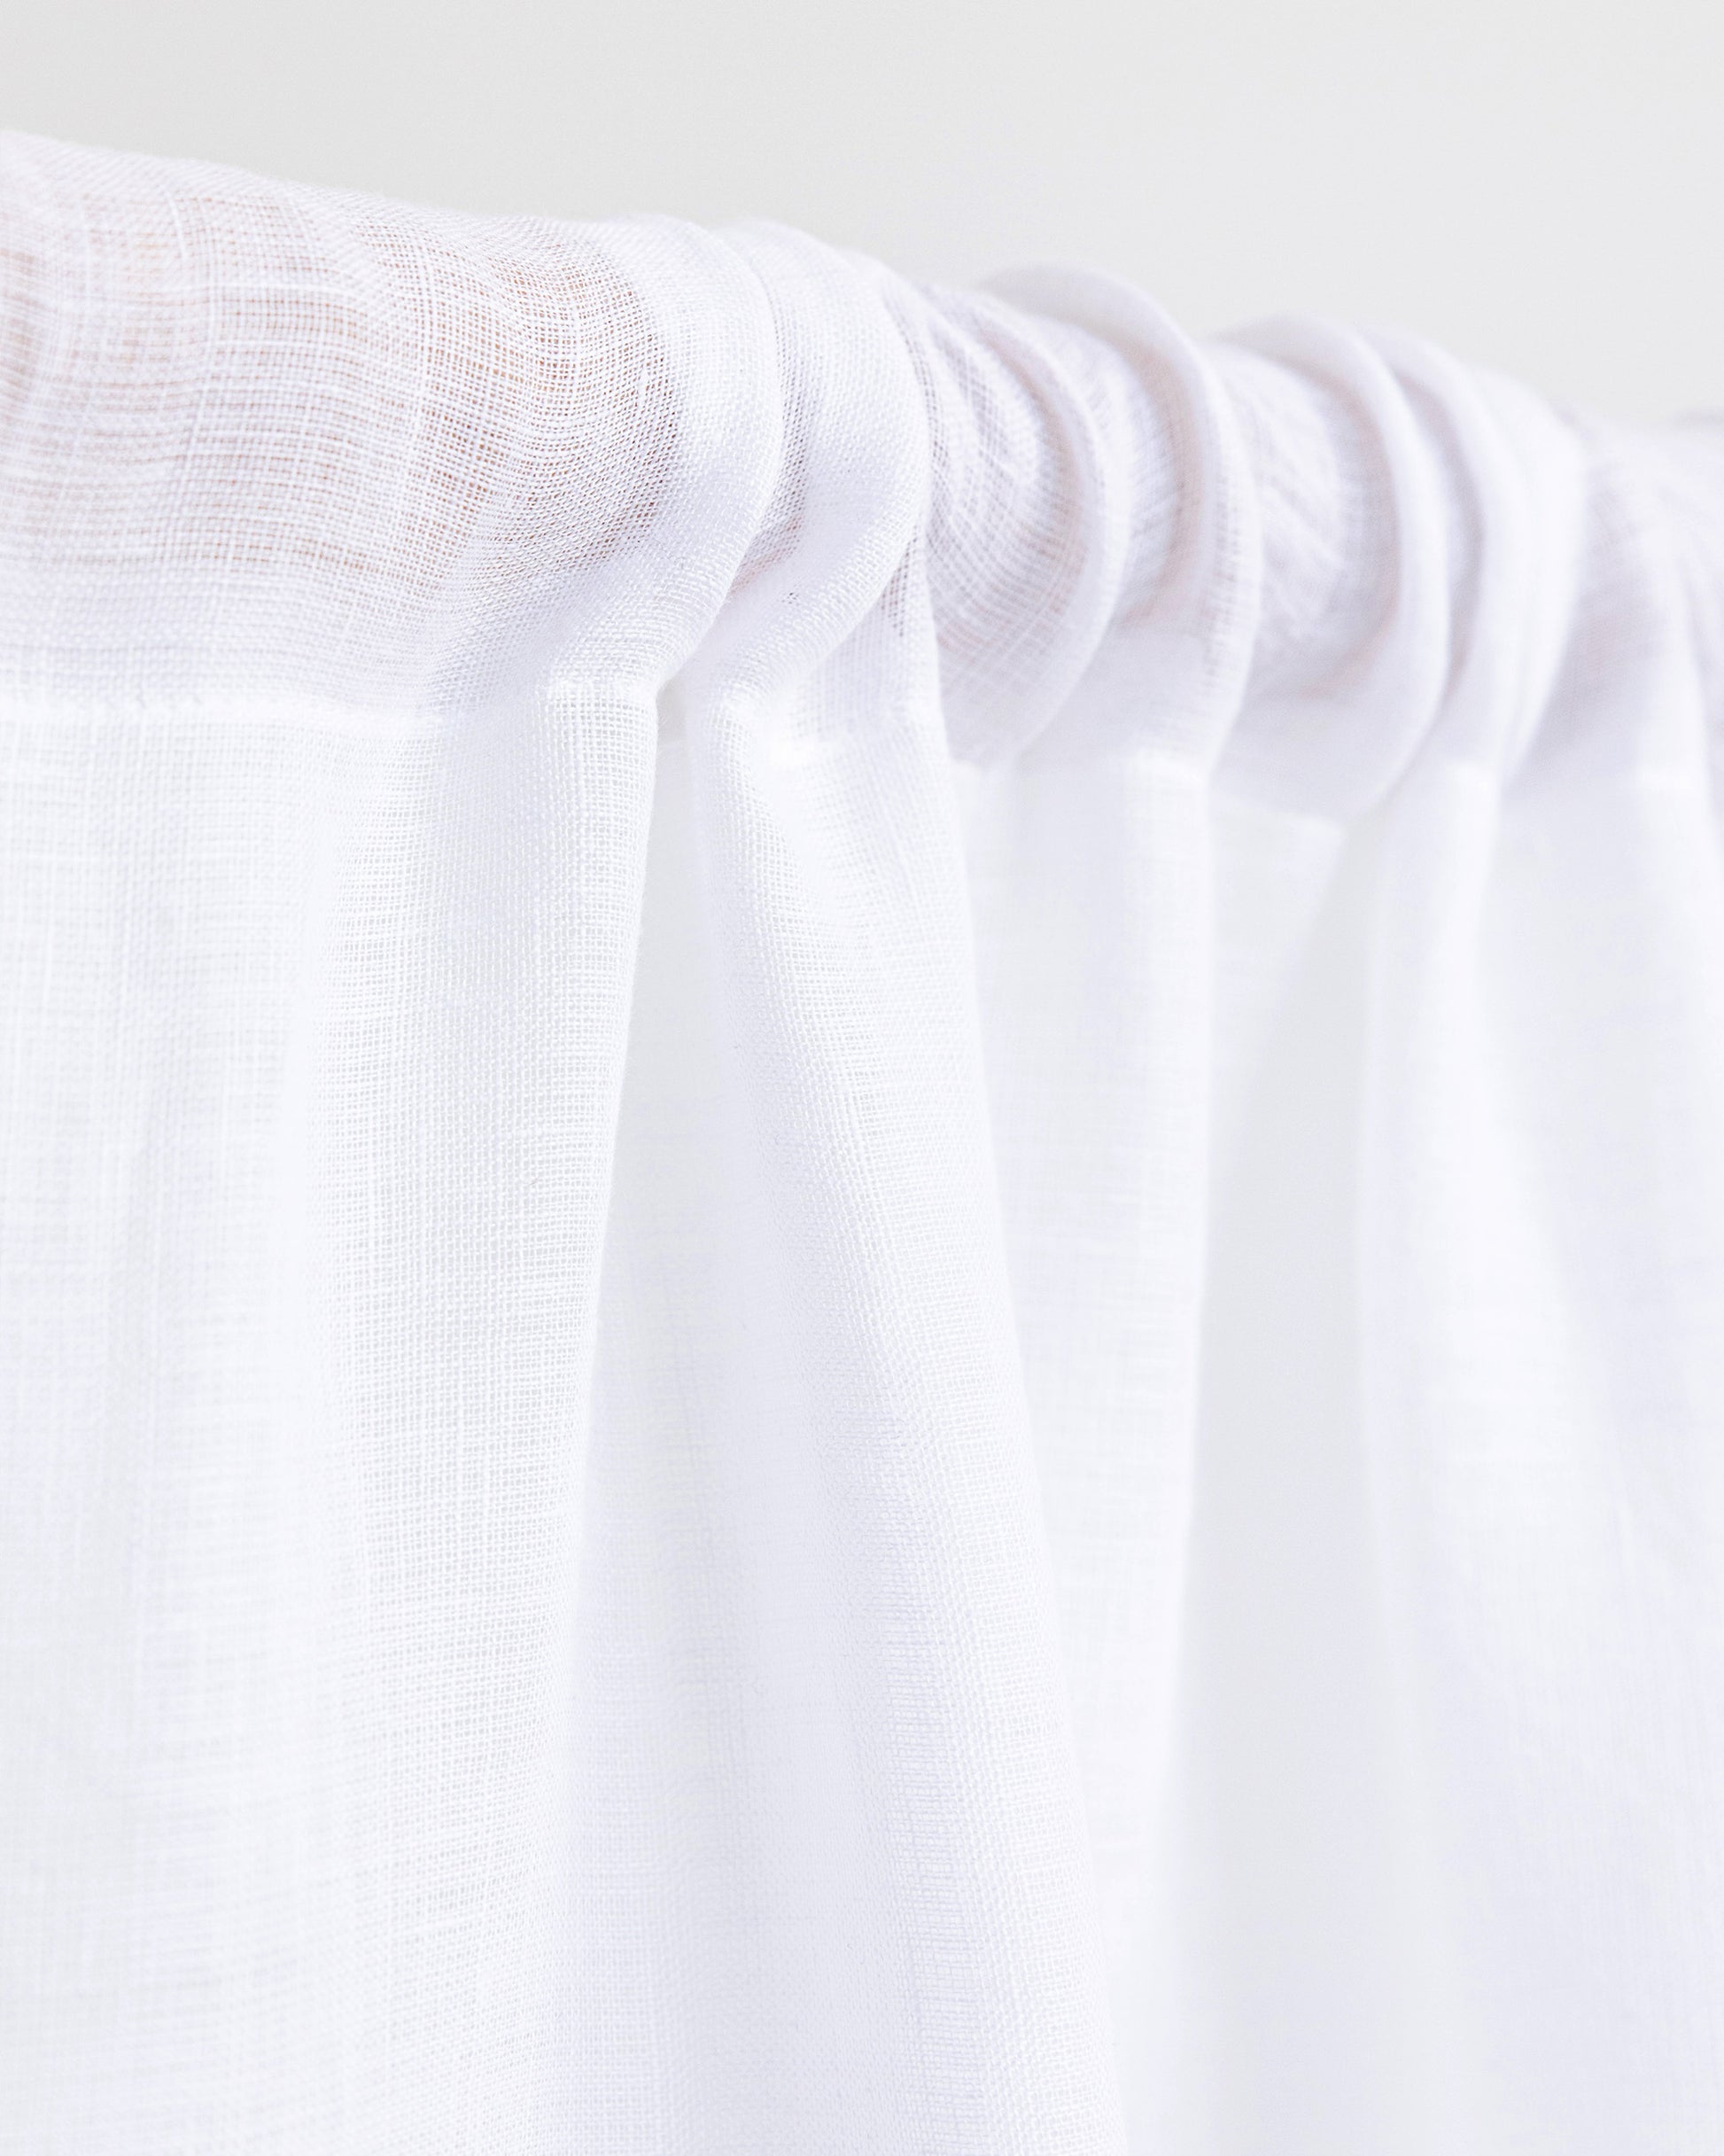 Sheer rod pocket linen curtain panel (1 pcs) - MagicLinen